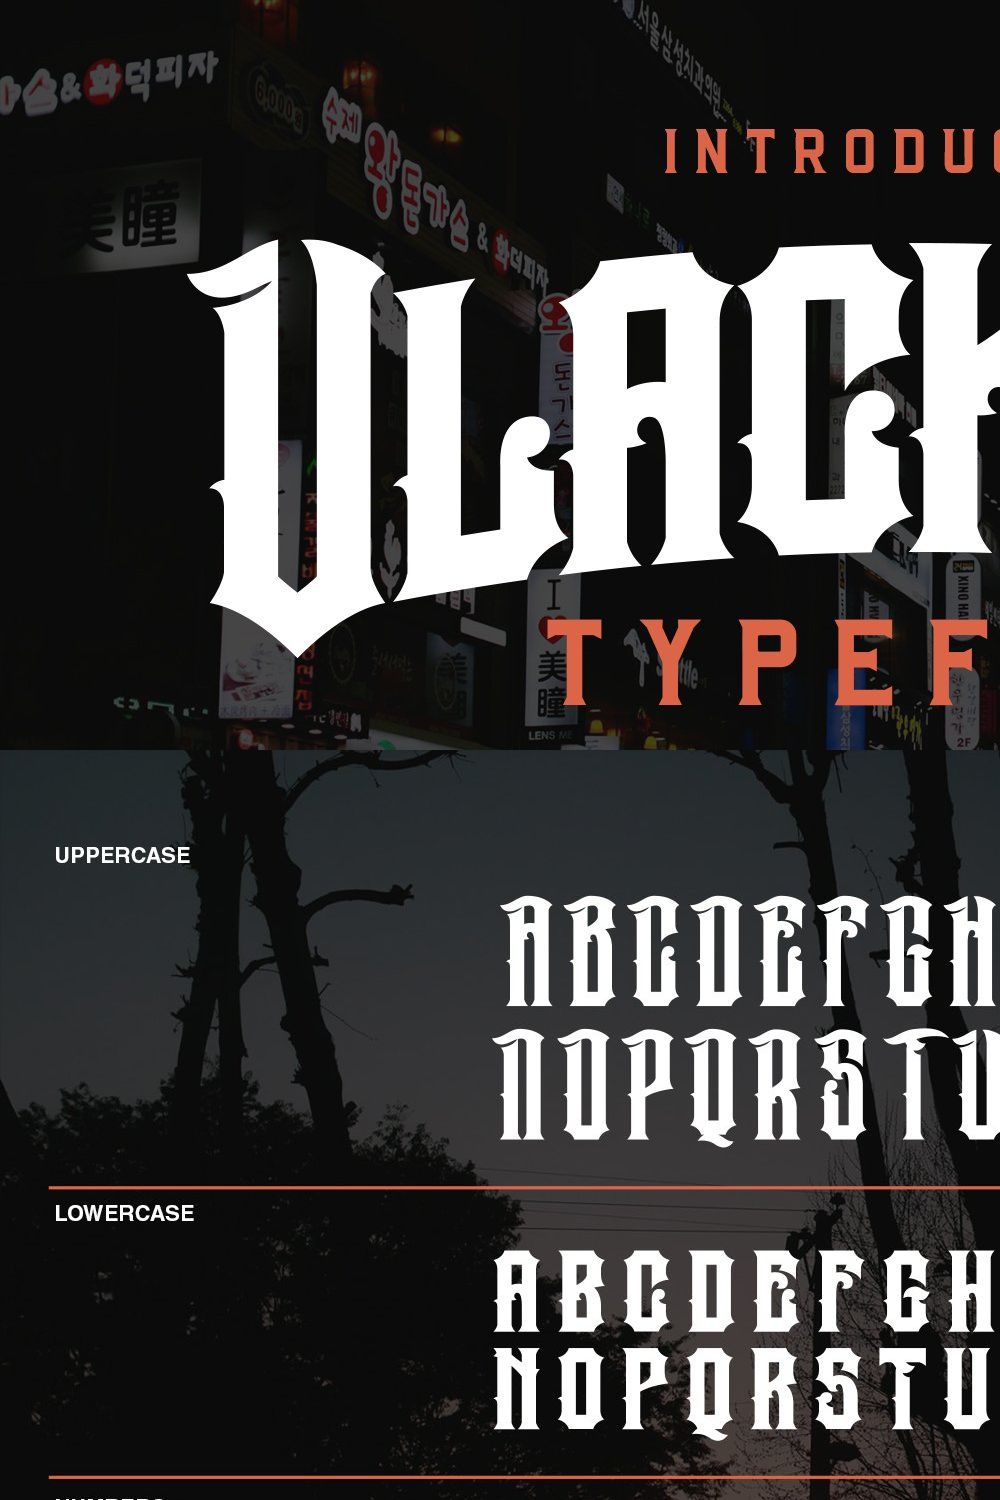 RSB VlackFink Typeface pinterest preview image.